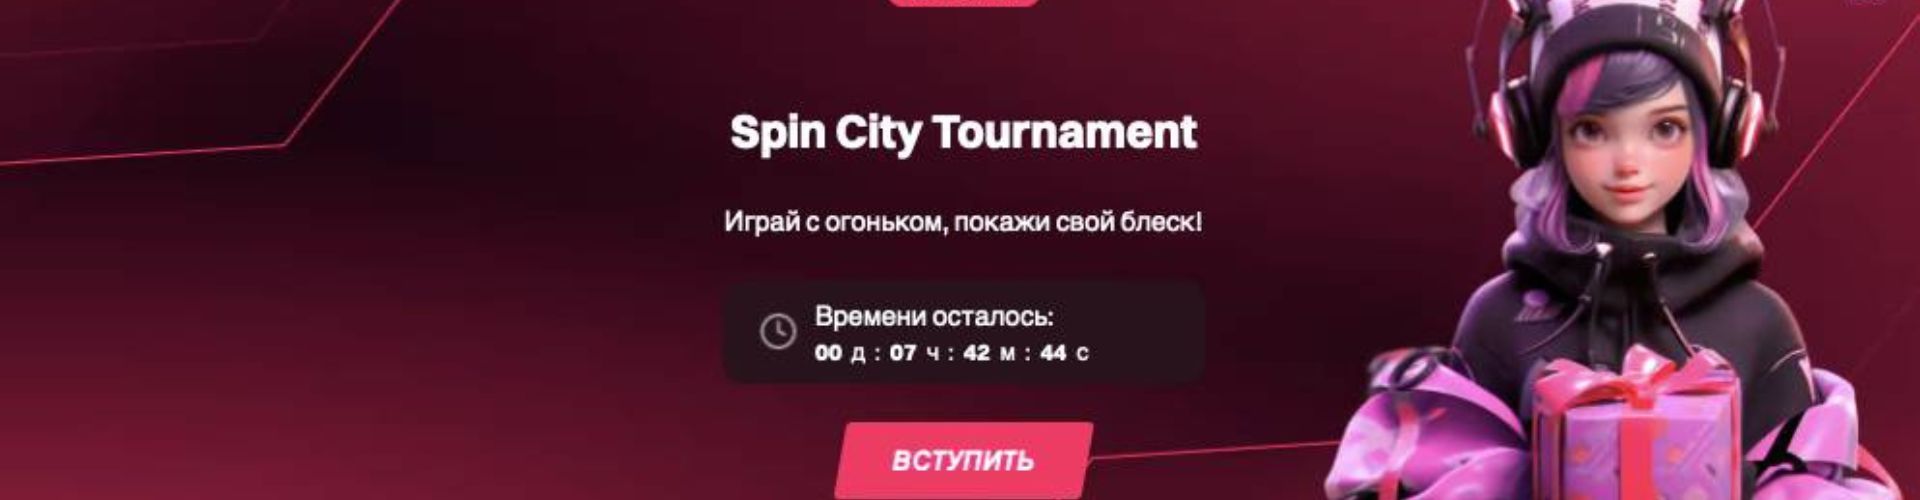 Spin City Tournament в Kent Casino